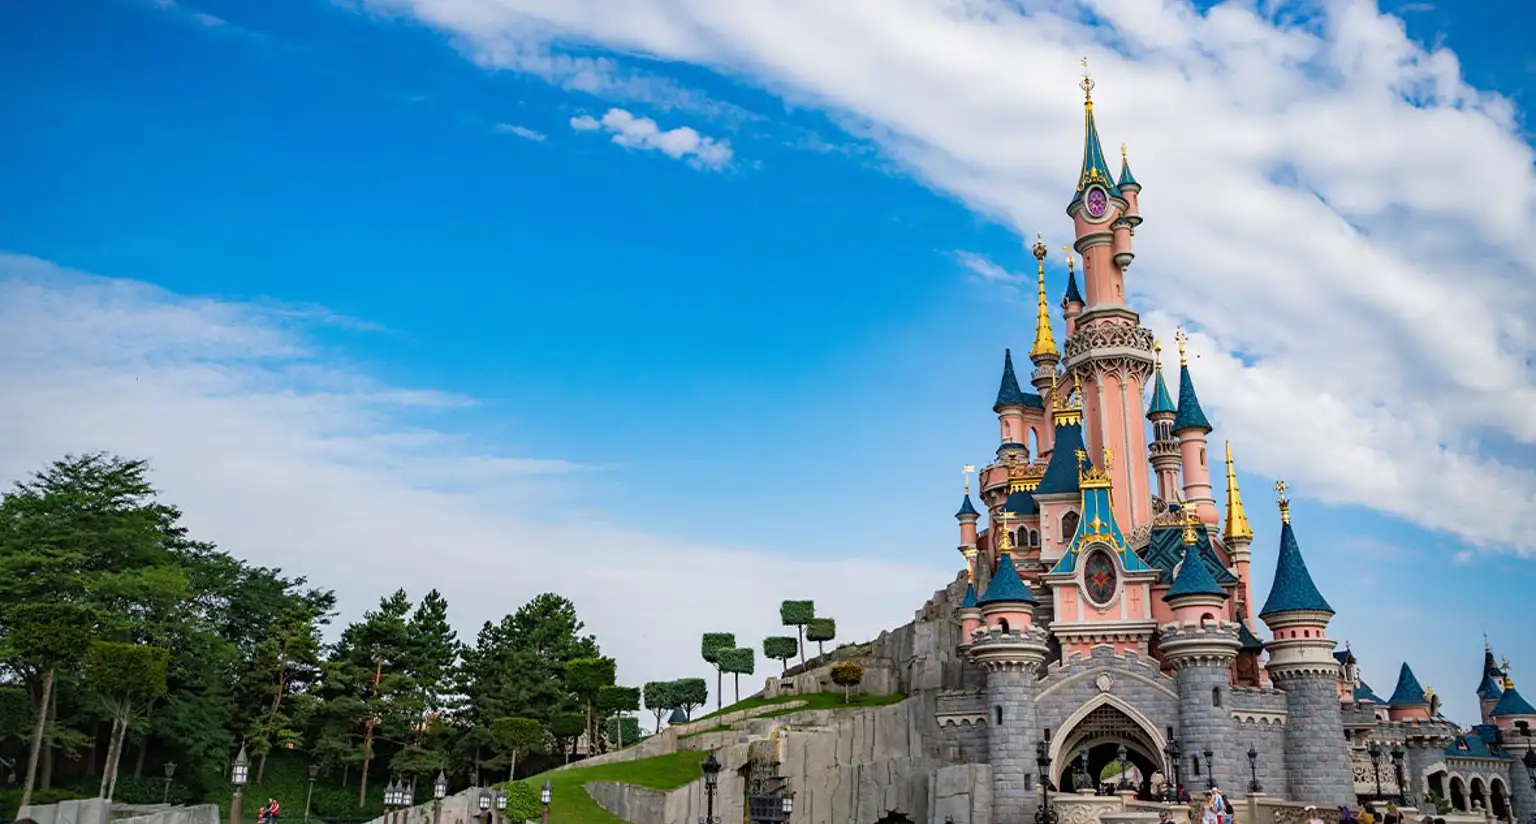 How to get to Disneyland® Paris